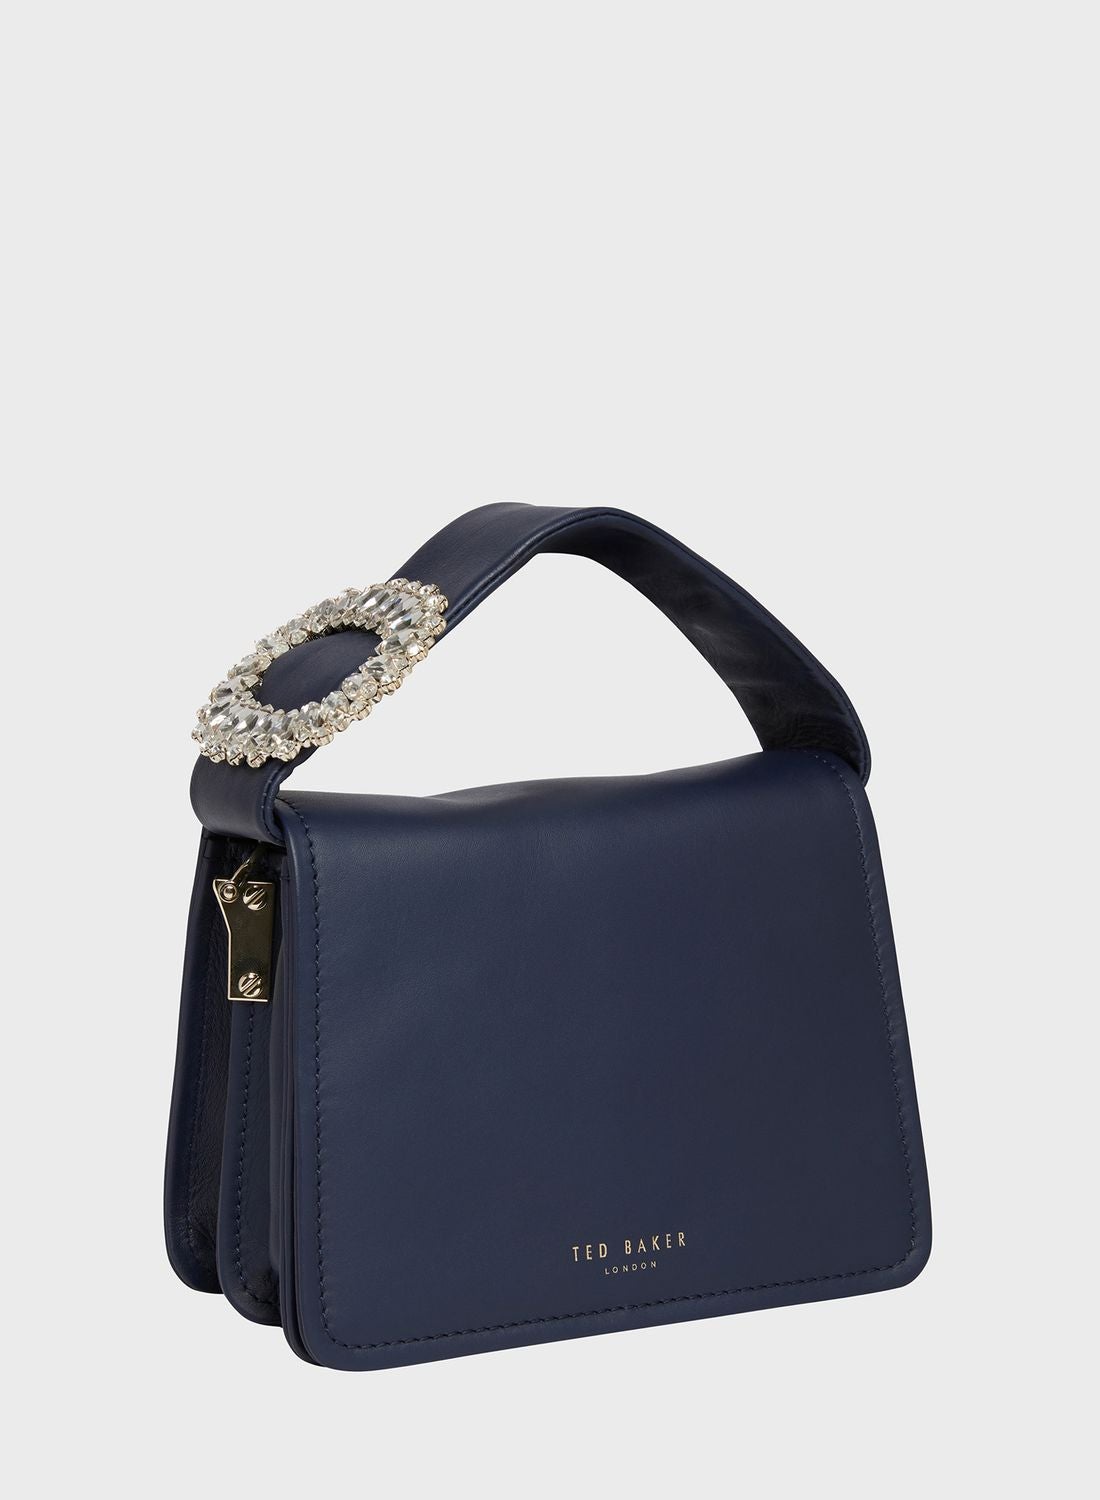 NIASINA Bow Detail Mini Cross Body Bag, Black: Handbags